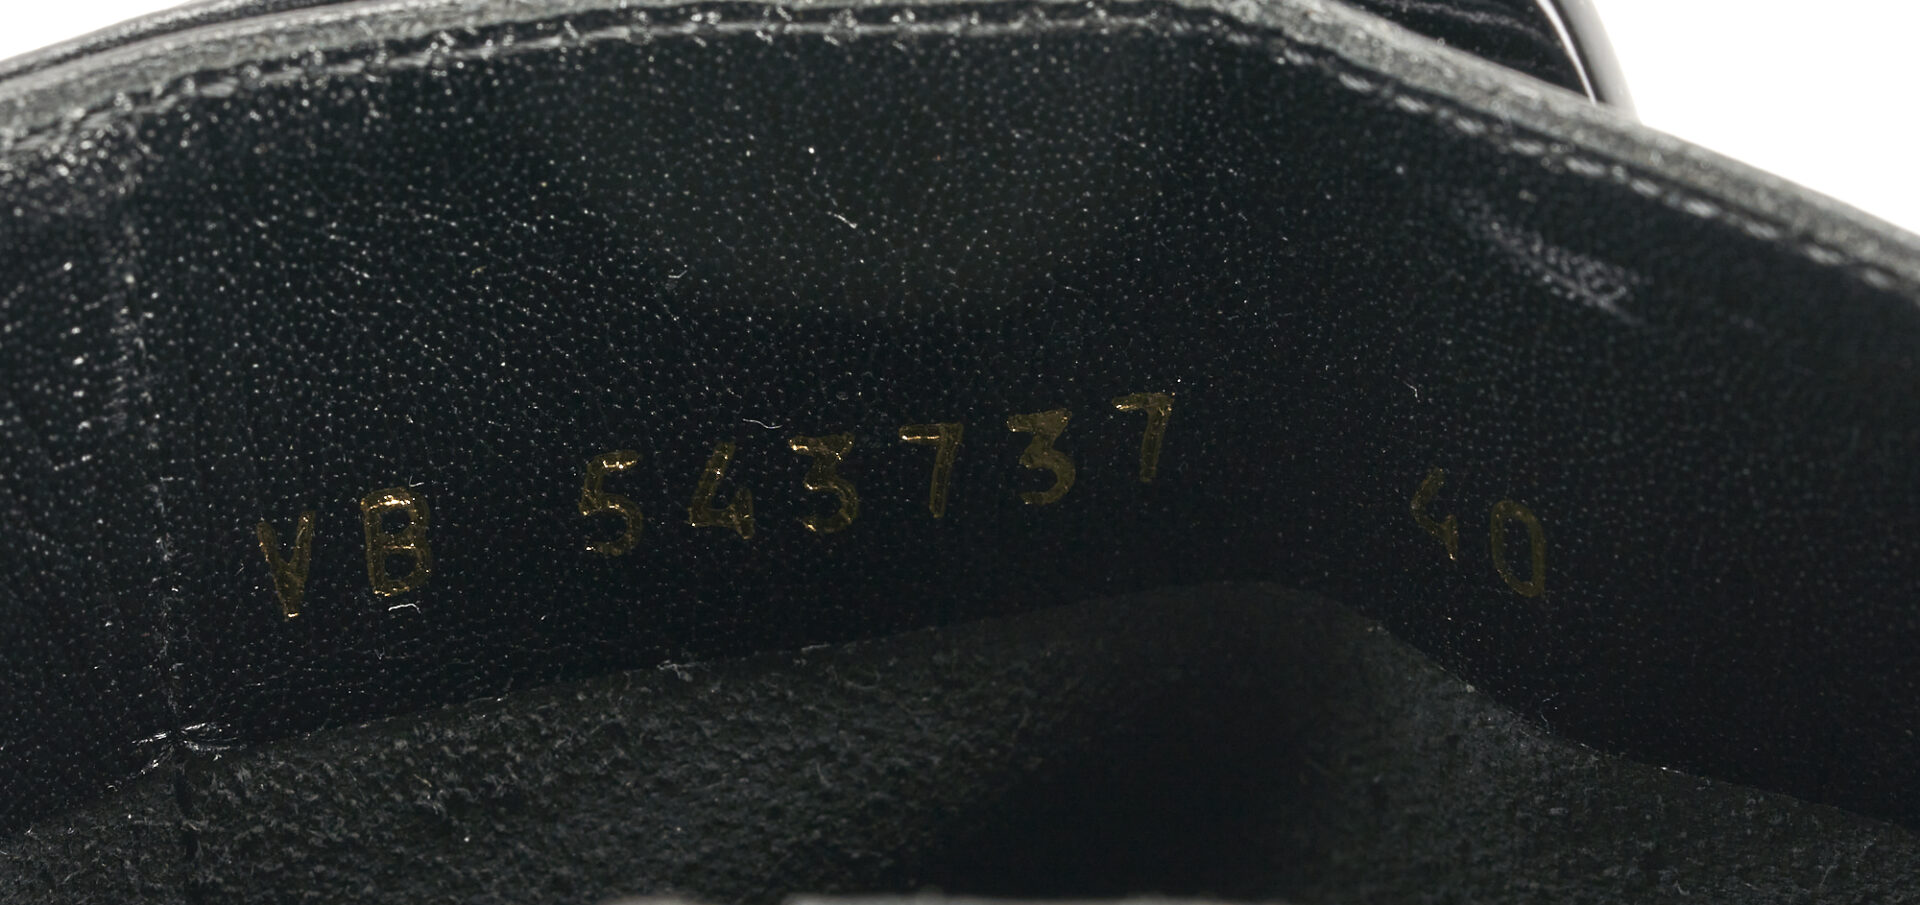 Lot 1251: 2 Pairs of Yves Saint Laurent Boots, incl. Billy 85 Platform Boot & Kiki 85 Zip Bootie